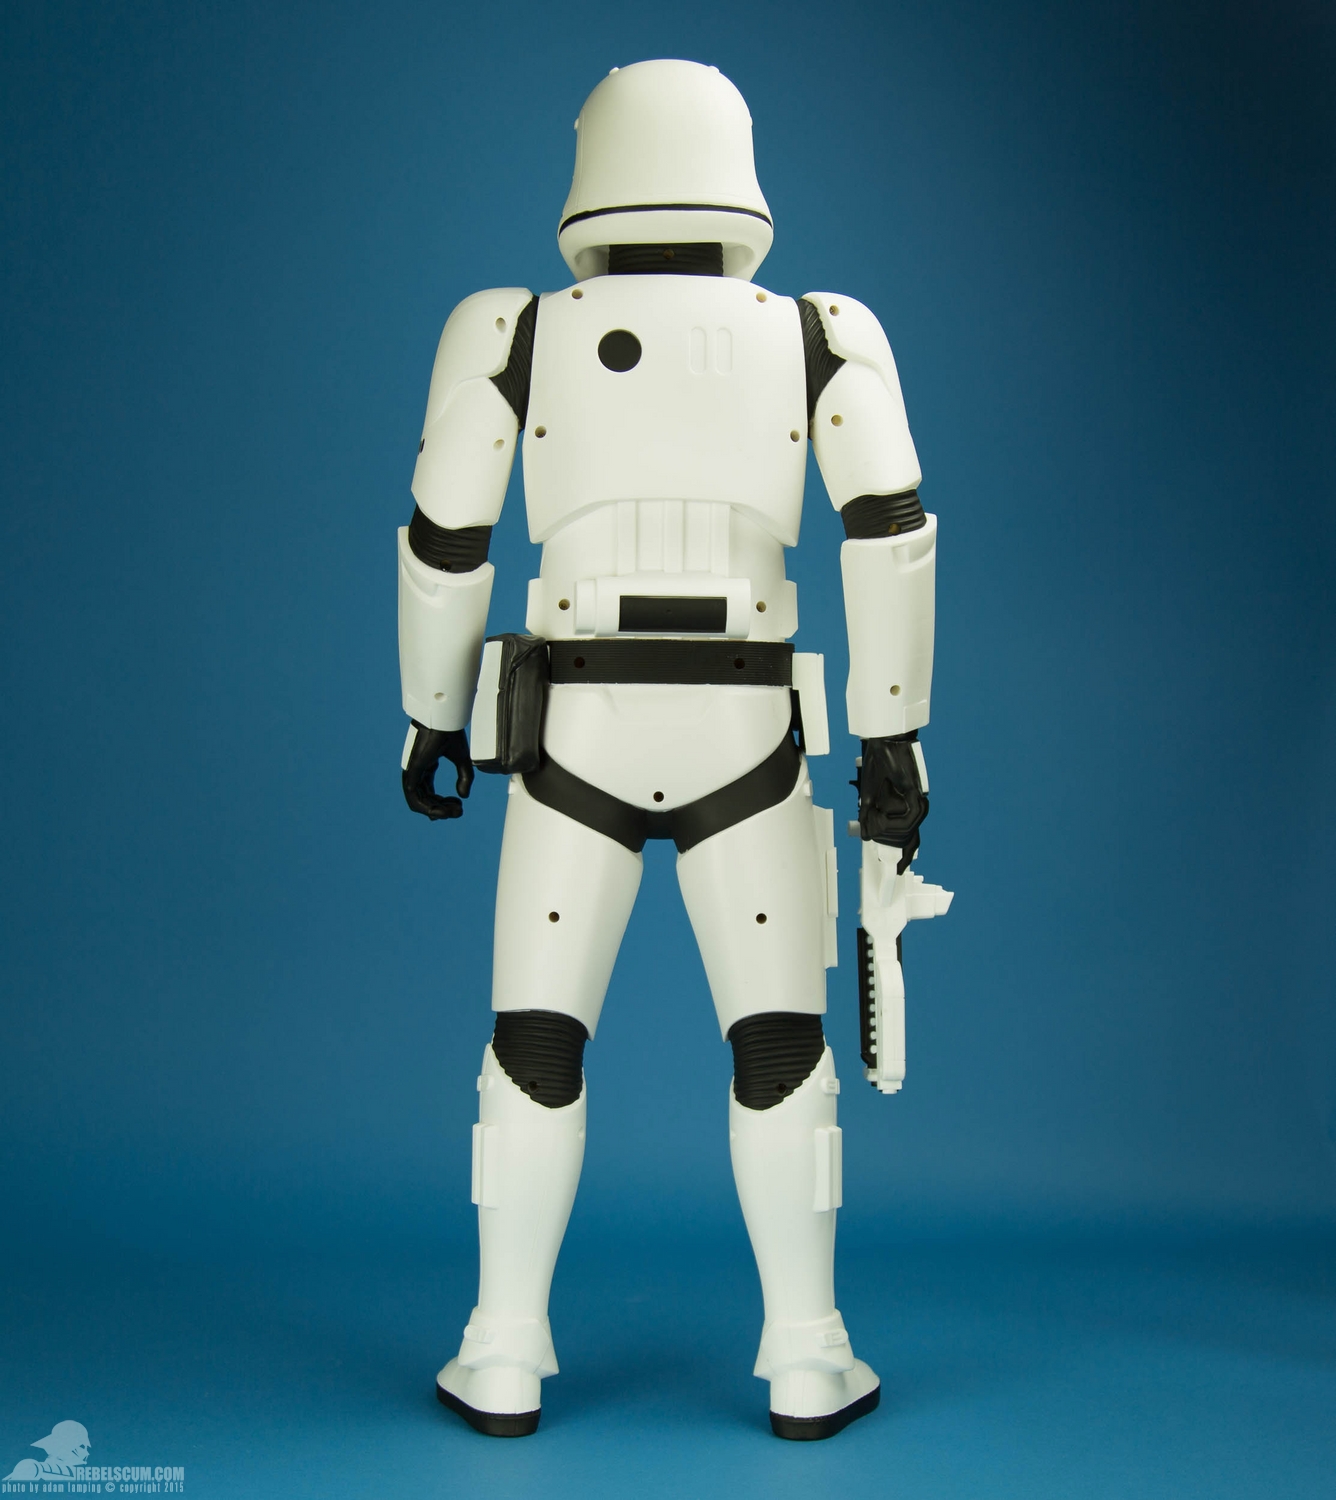 jakks-pacific-first-order-stormtrooper-31-inch-figure-004.jpg